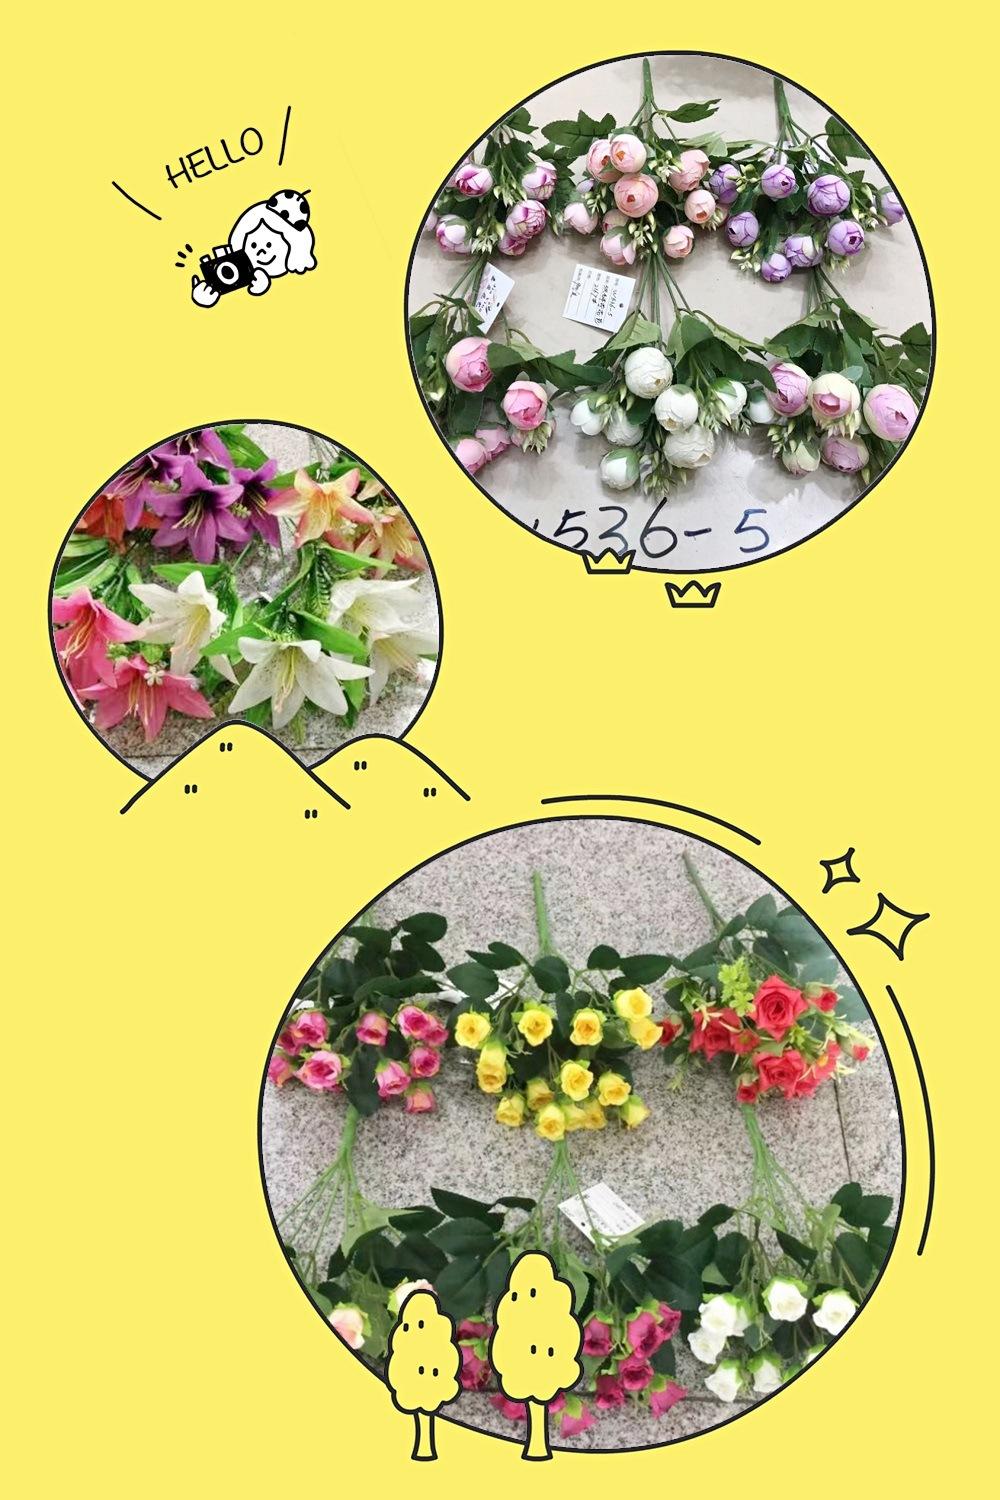 New Designed Flower Home Wedding Decorative Artificial Flower Bouquet for Sale